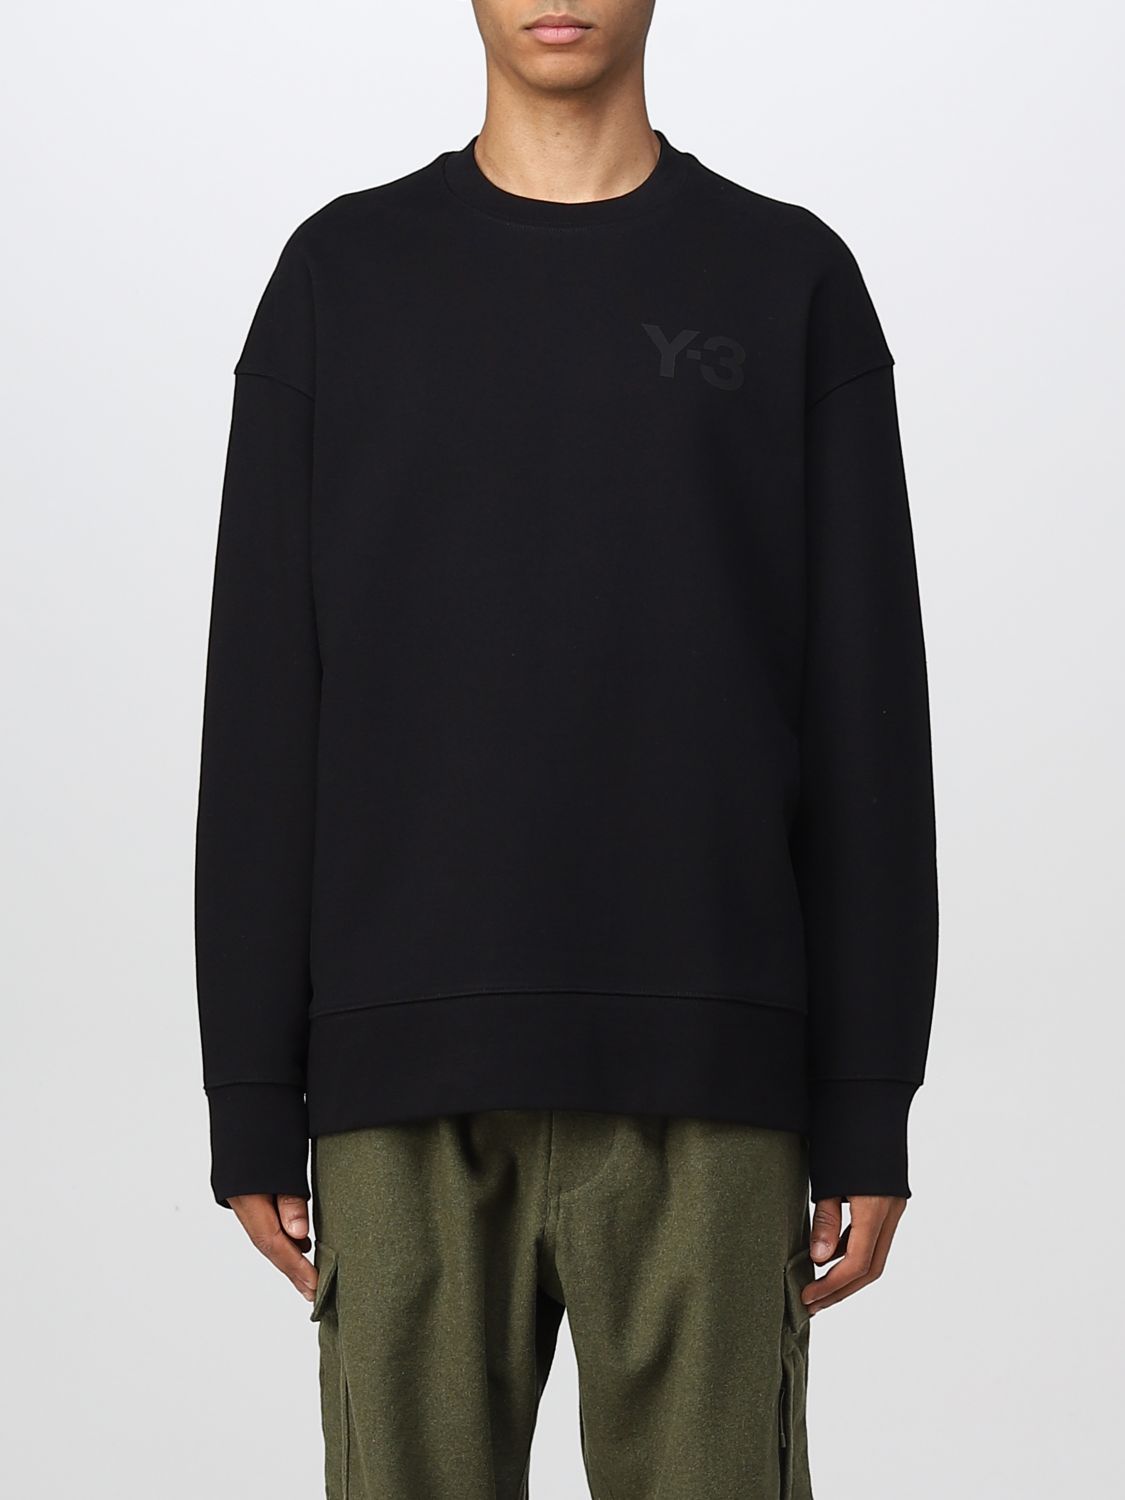 Y-3 Outlet: sweatshirt for man - Black | Y-3 sweatshirt GV4194 online ...